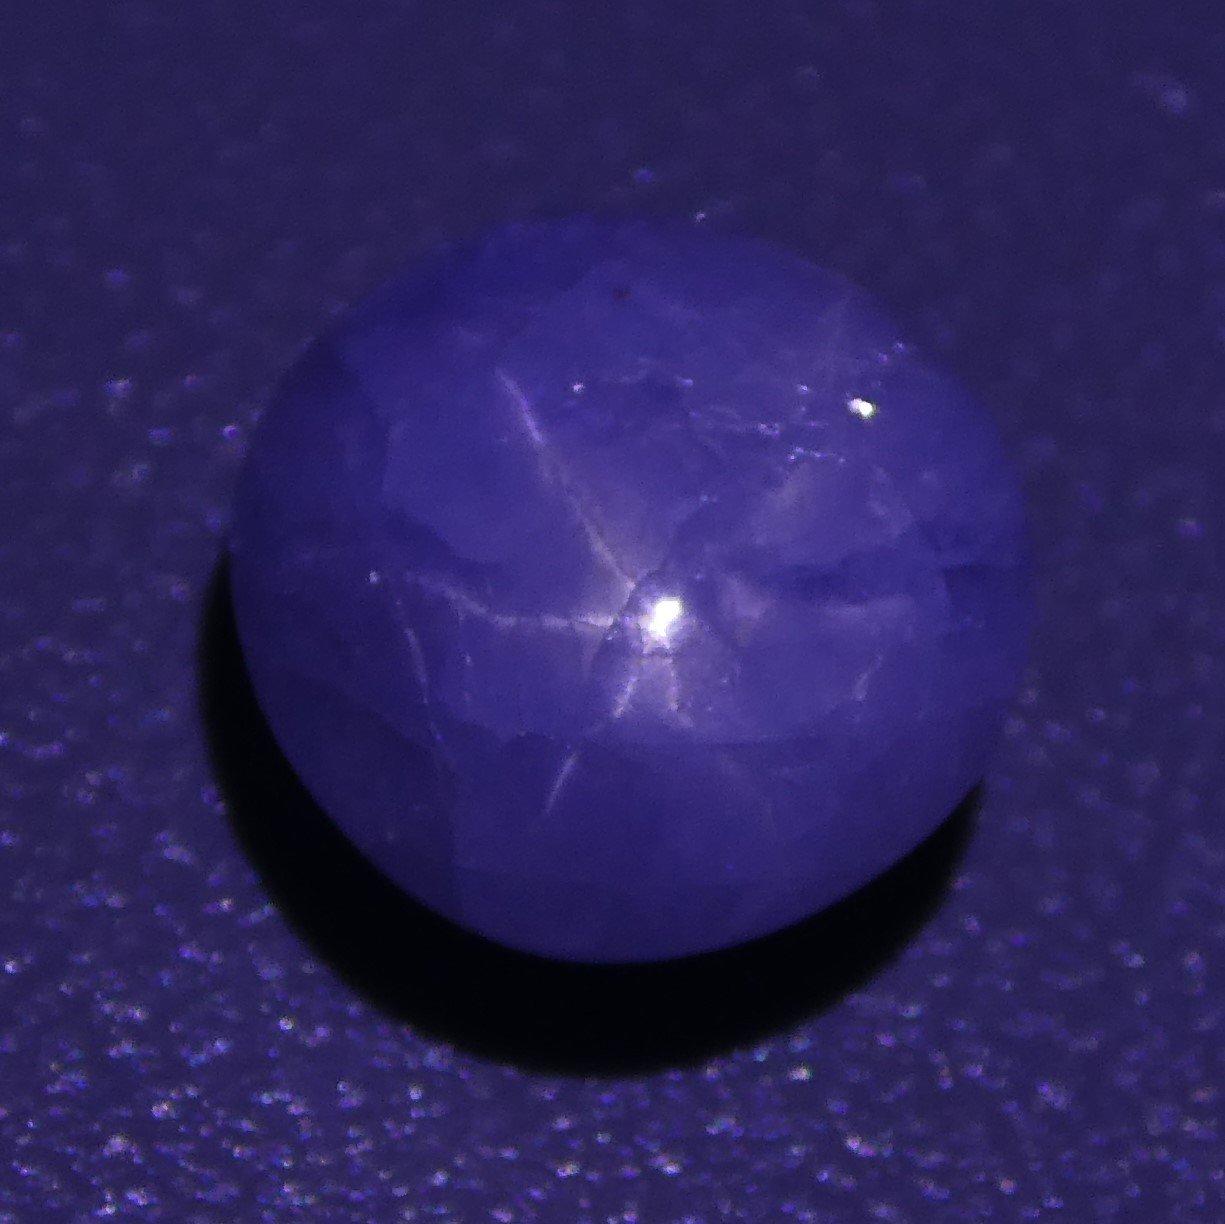 3.04 ct Unheated Blue Ceylon Star Sapphire